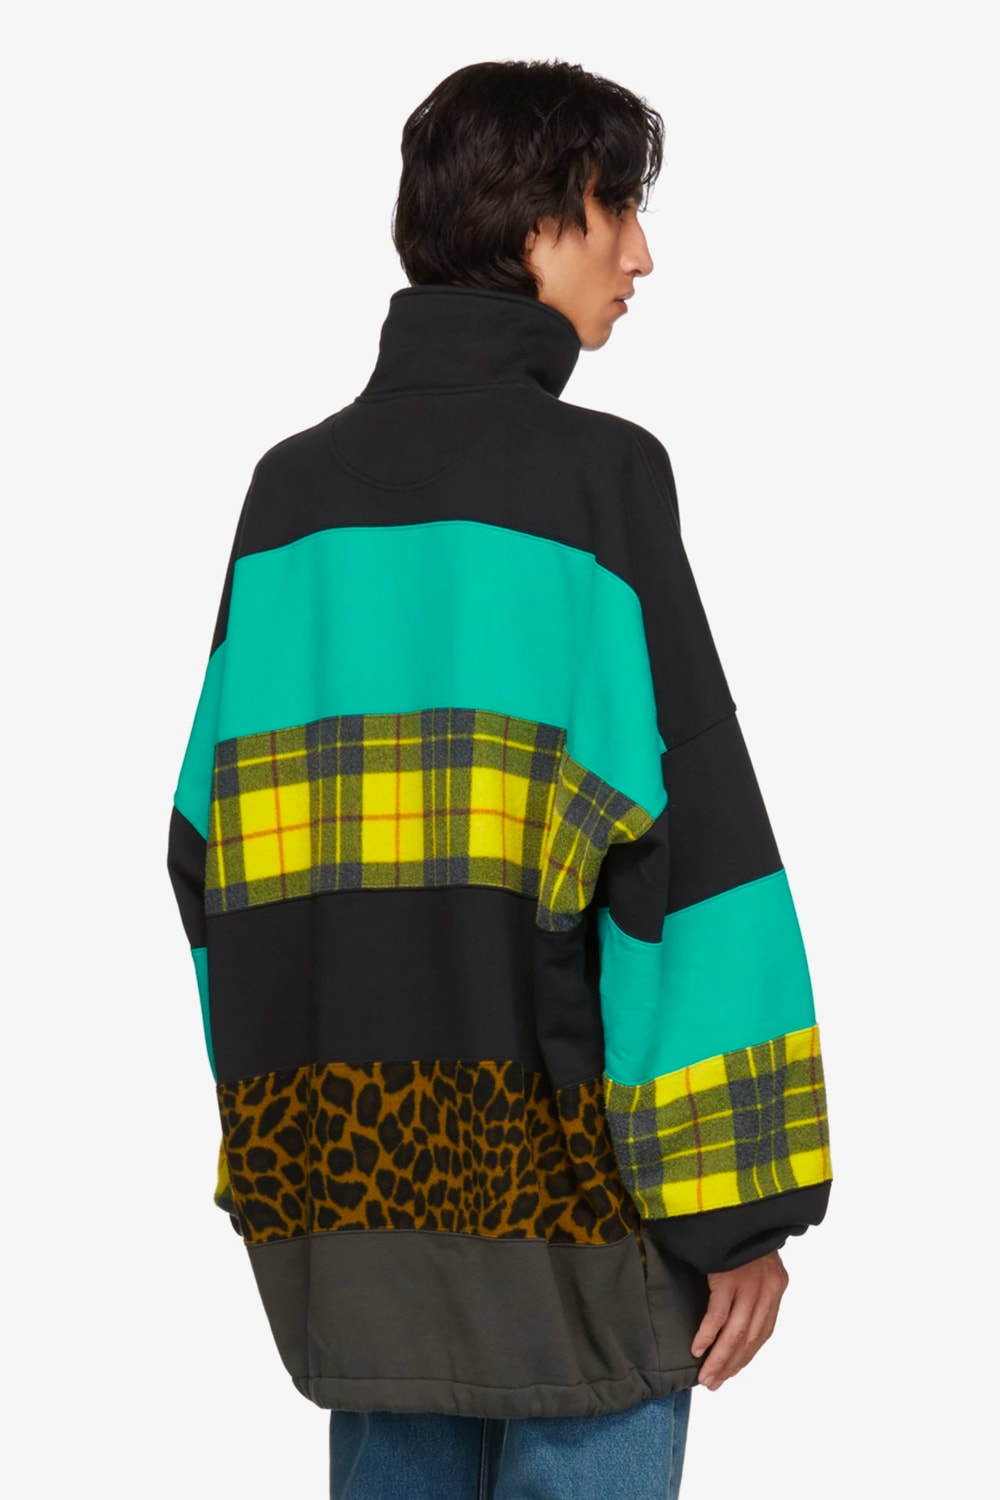 Balenciaga Pre-Fall 2018 Collection Chimney Sweaters multicolor check leaopard tartan demna gvasalia